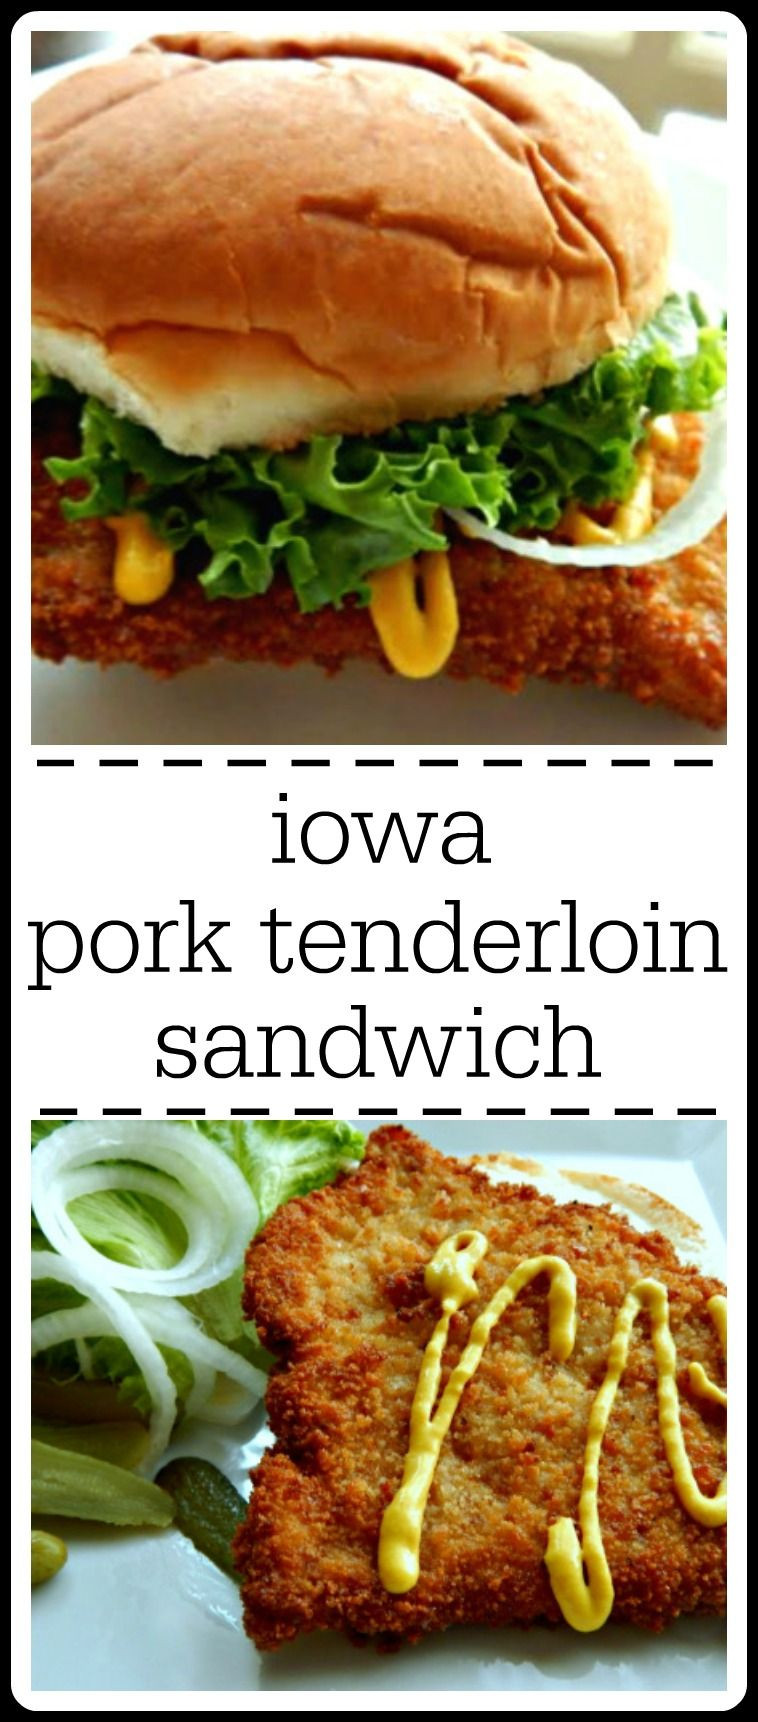 Iowa Pork Tenderloin Sandwich
 The Iowa Pork Tenderloin Sandwich Recipe